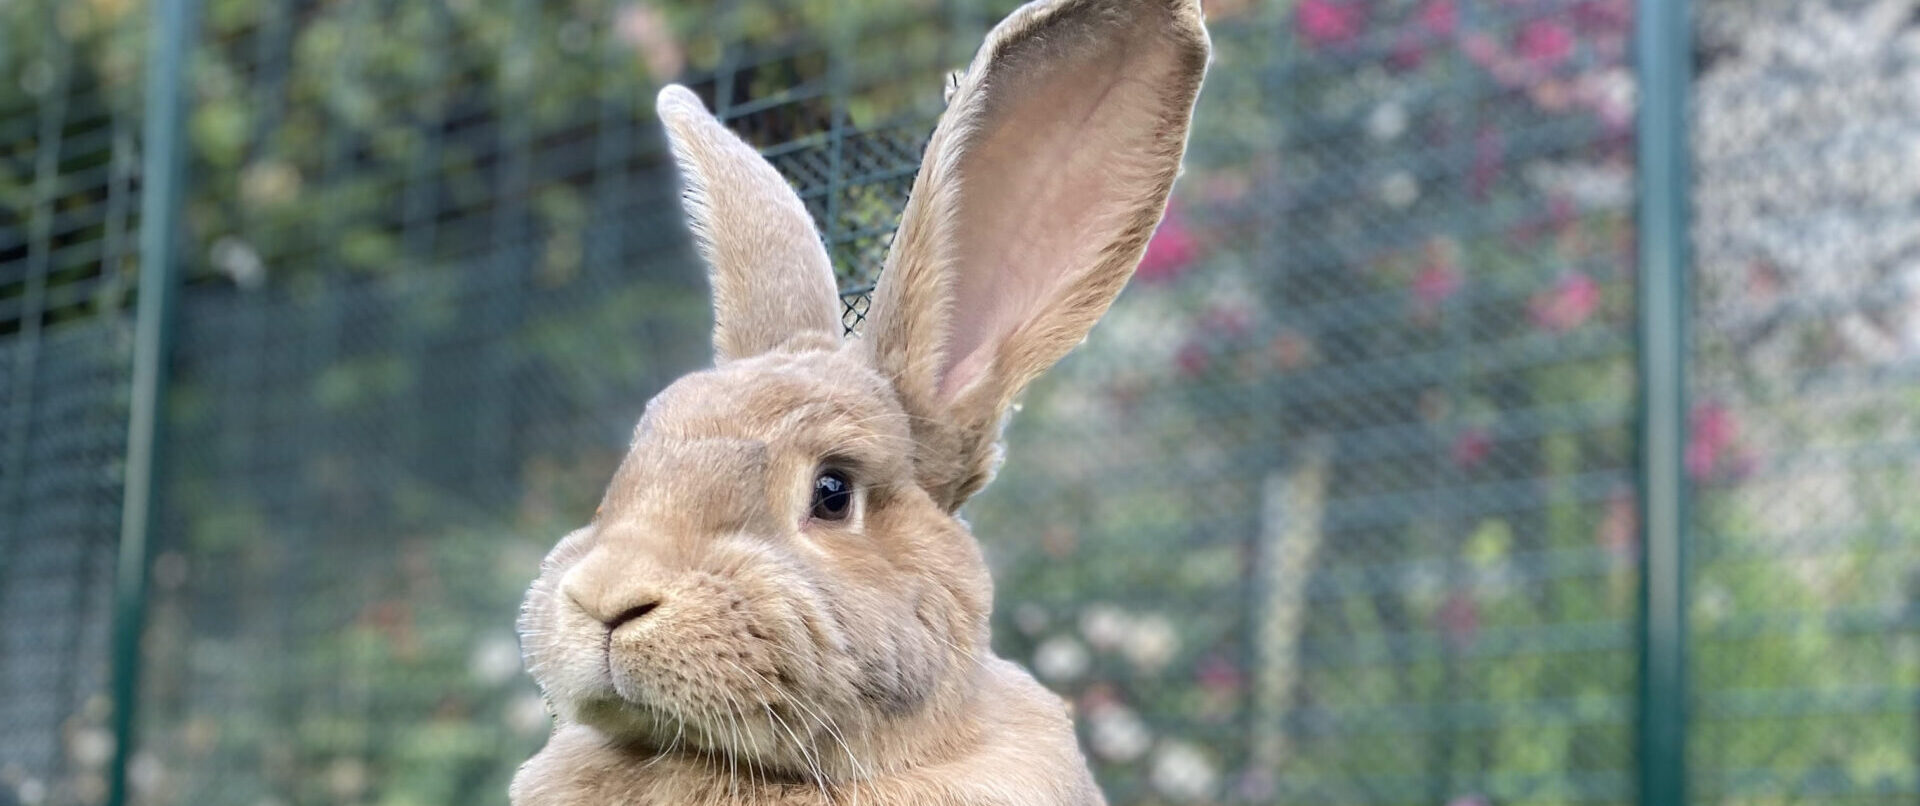 Health Benefits Of Rabbit Ownership